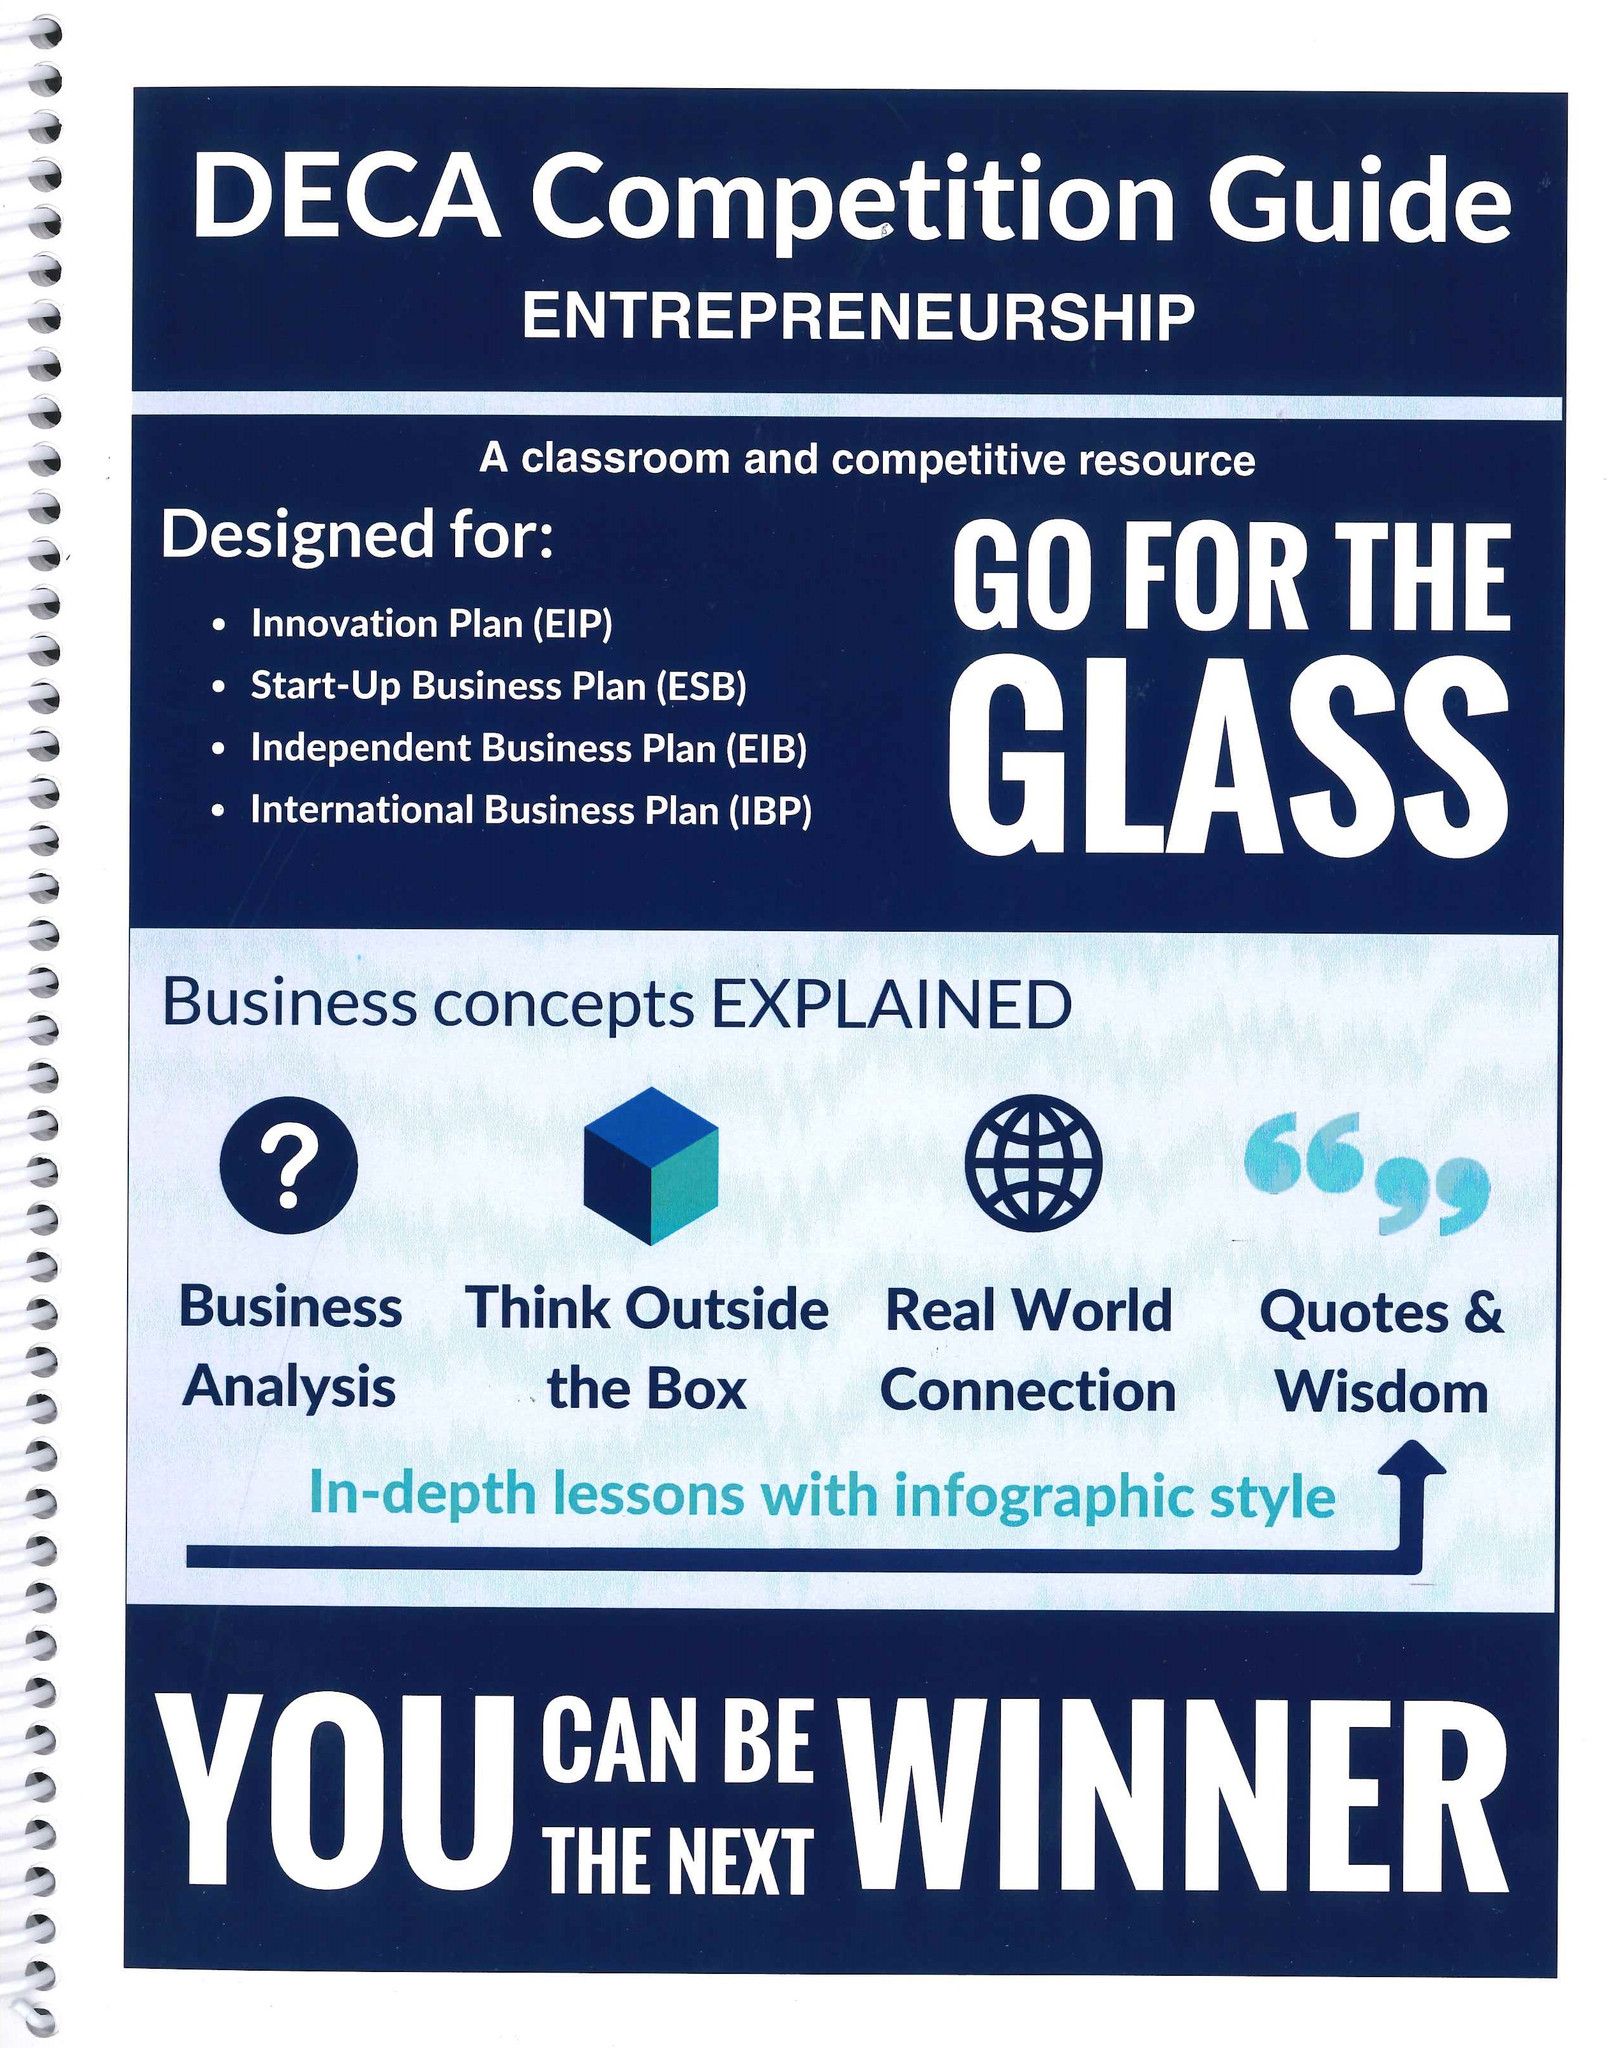 Lean Entrepreneurship Guide Deca Images Small Business Resources Innovation Entrepreneurship